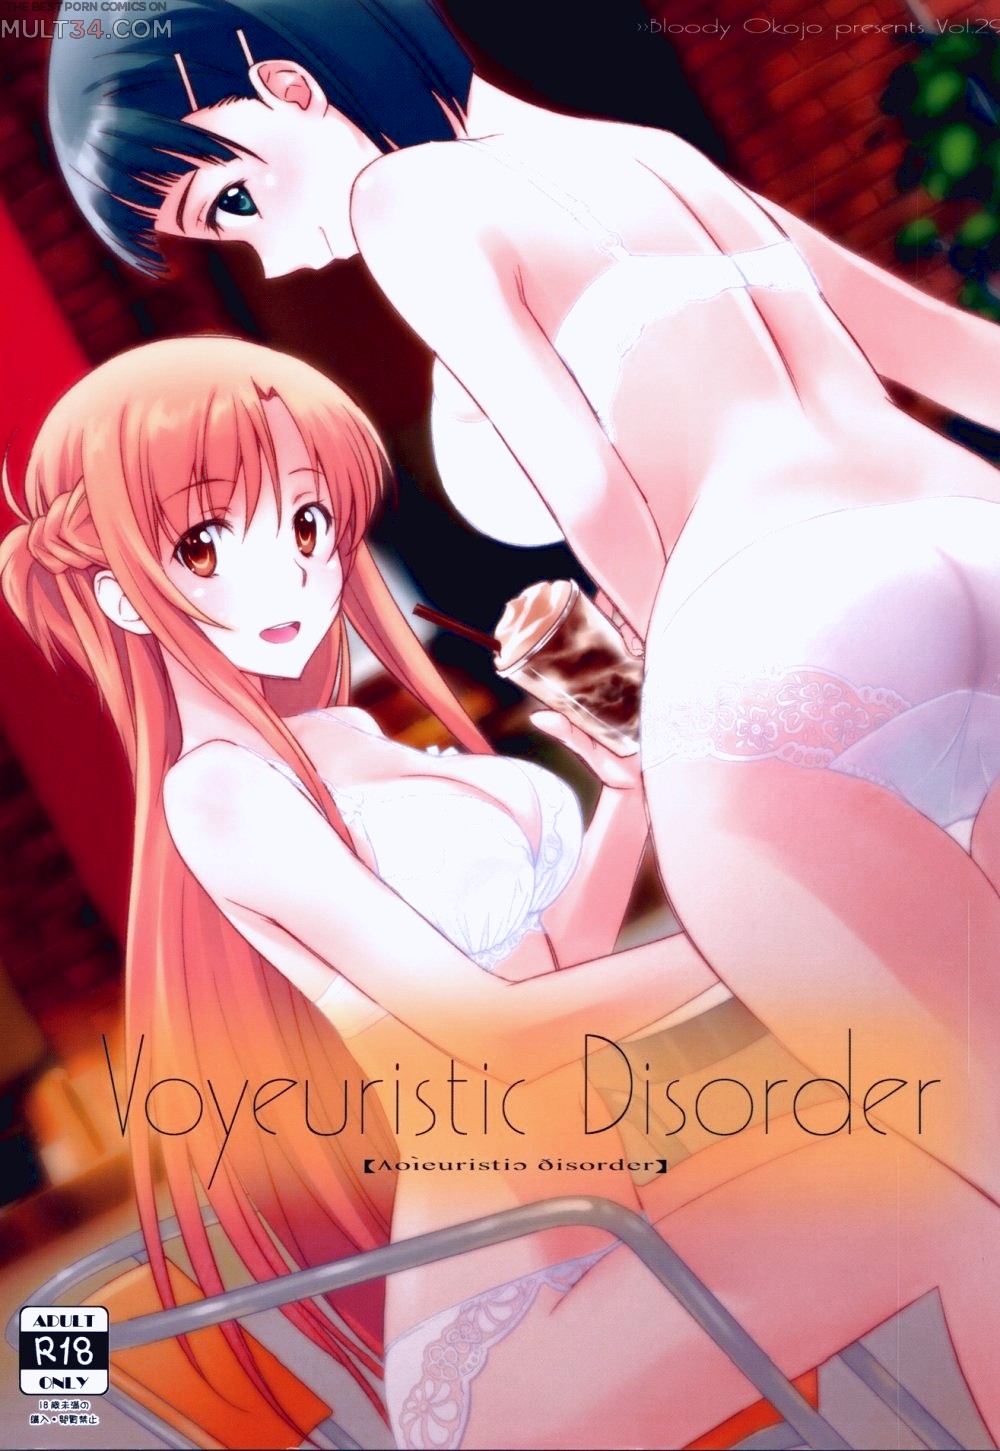 Voyeuristic Disorder hentai manga for free | MULT34